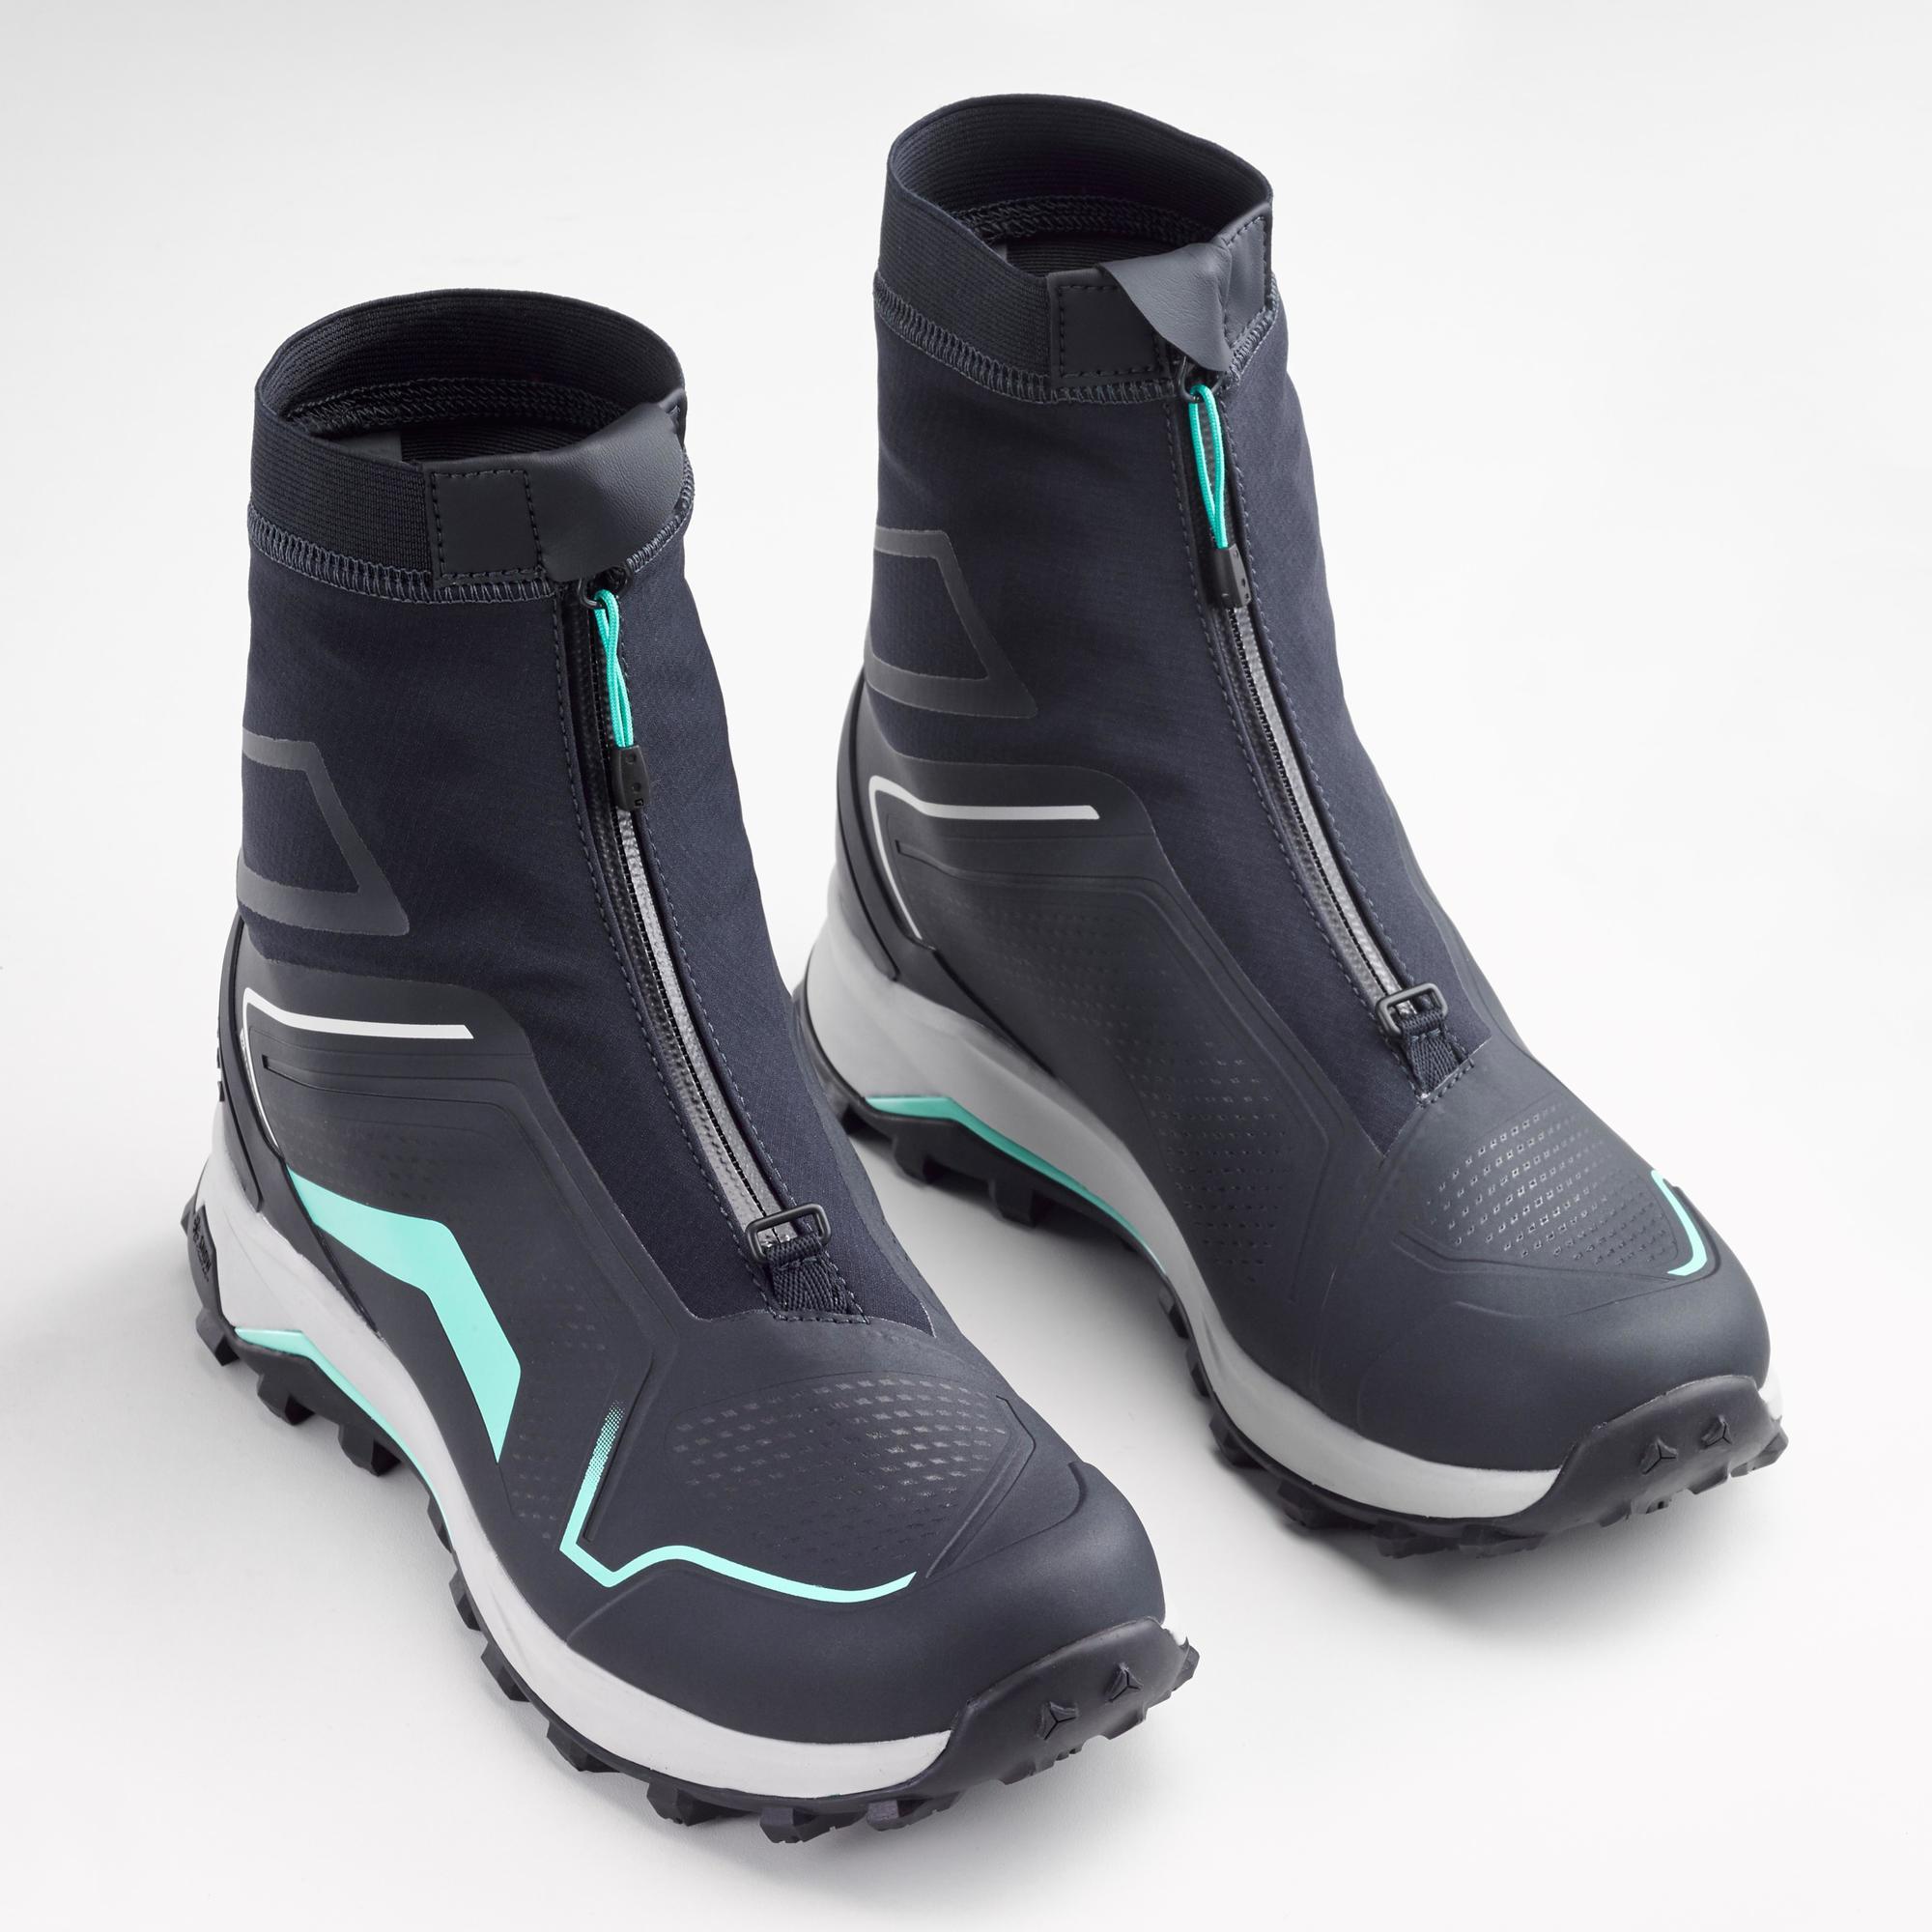 X Warm Snow Hiking Mid Shoes SH920 